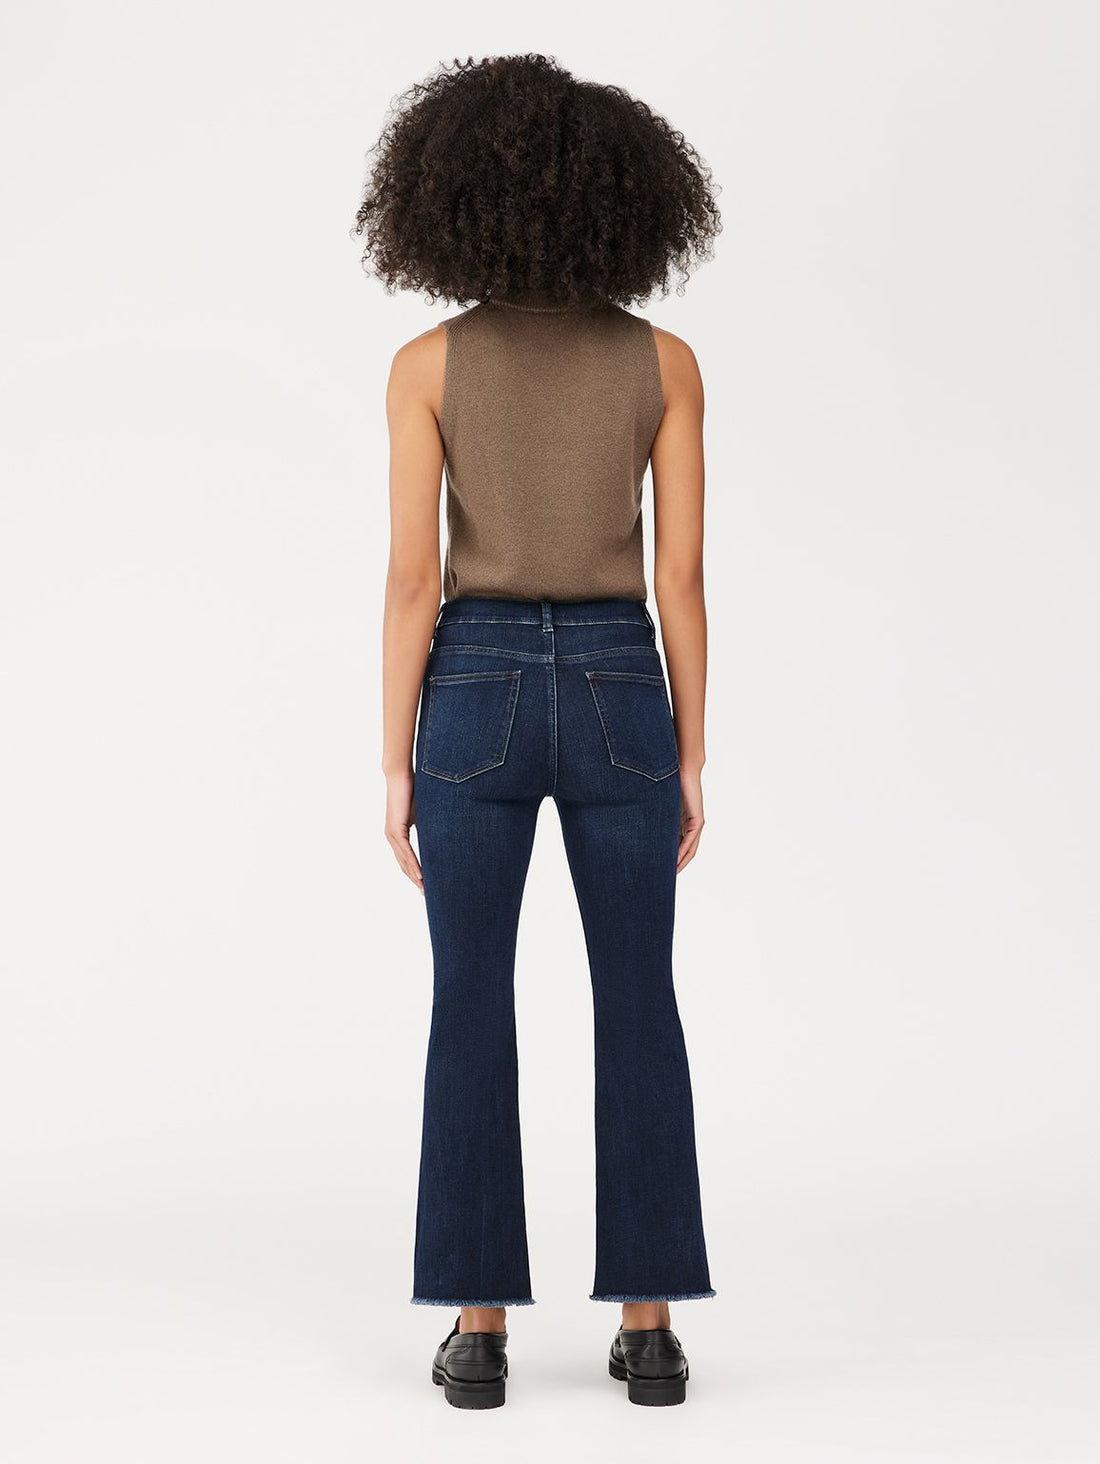 Bridget Cove Bootcut High Rise Crop Jeans - Premium Denim Denim from DL1961 - Just $132.30! Shop now at shopthedenimbar